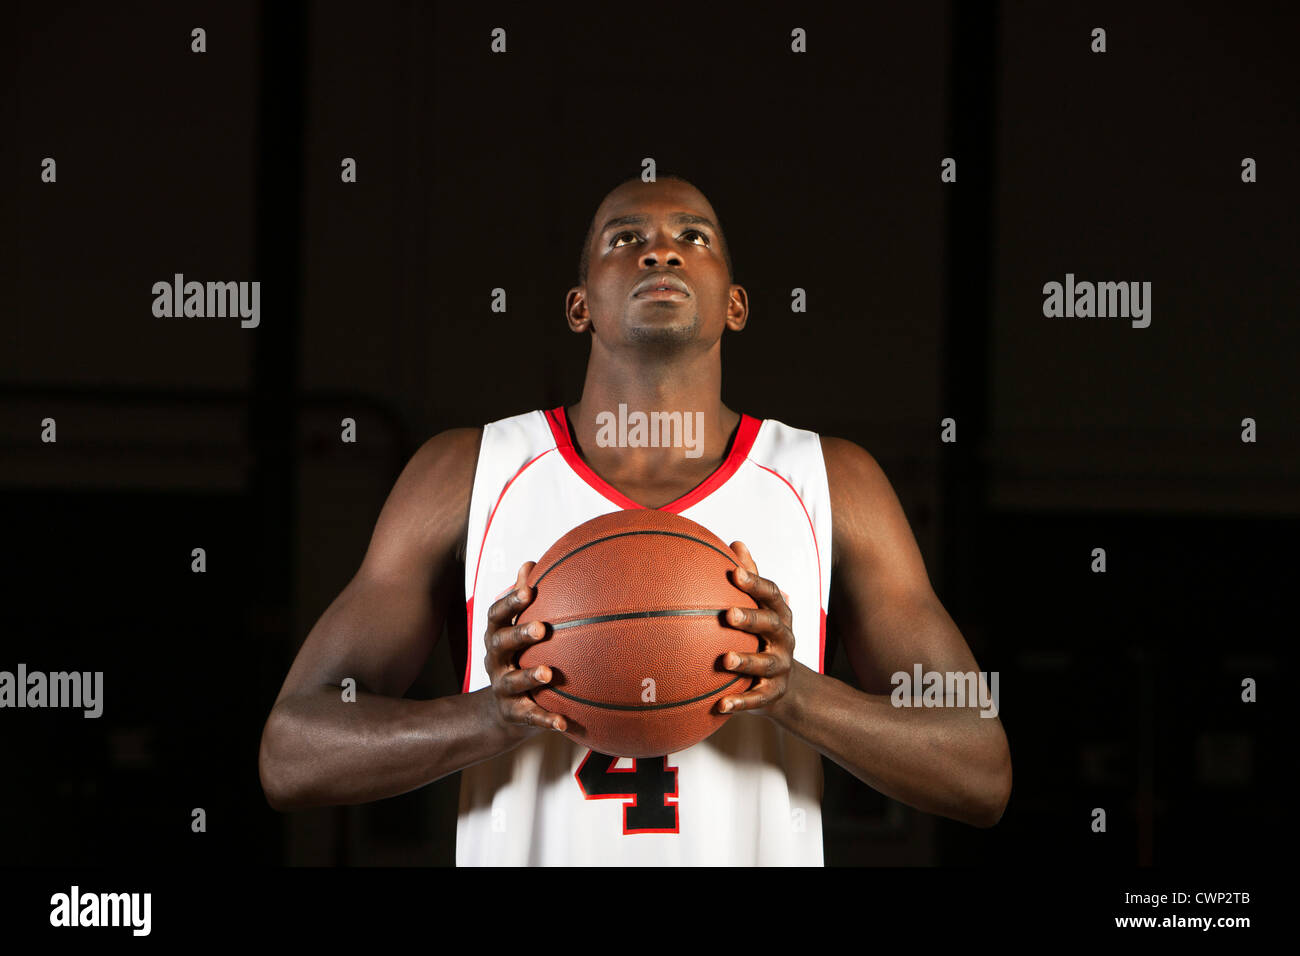 Basketball player preparing to shoot basketball, portrait Stock Photo